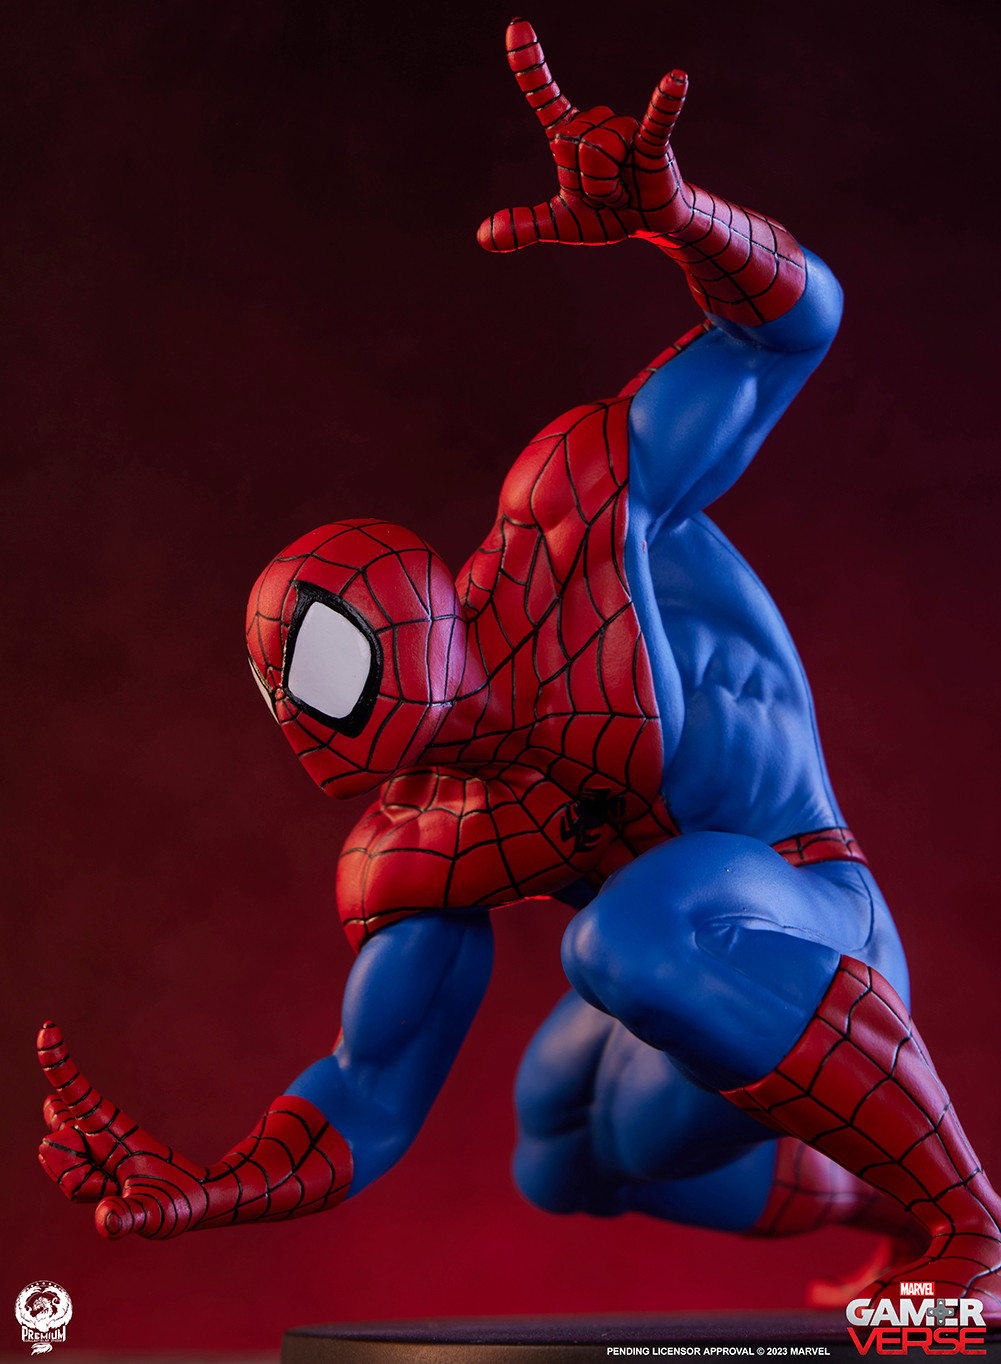 Marvel Gamerverse Spider-Man Action Figure 